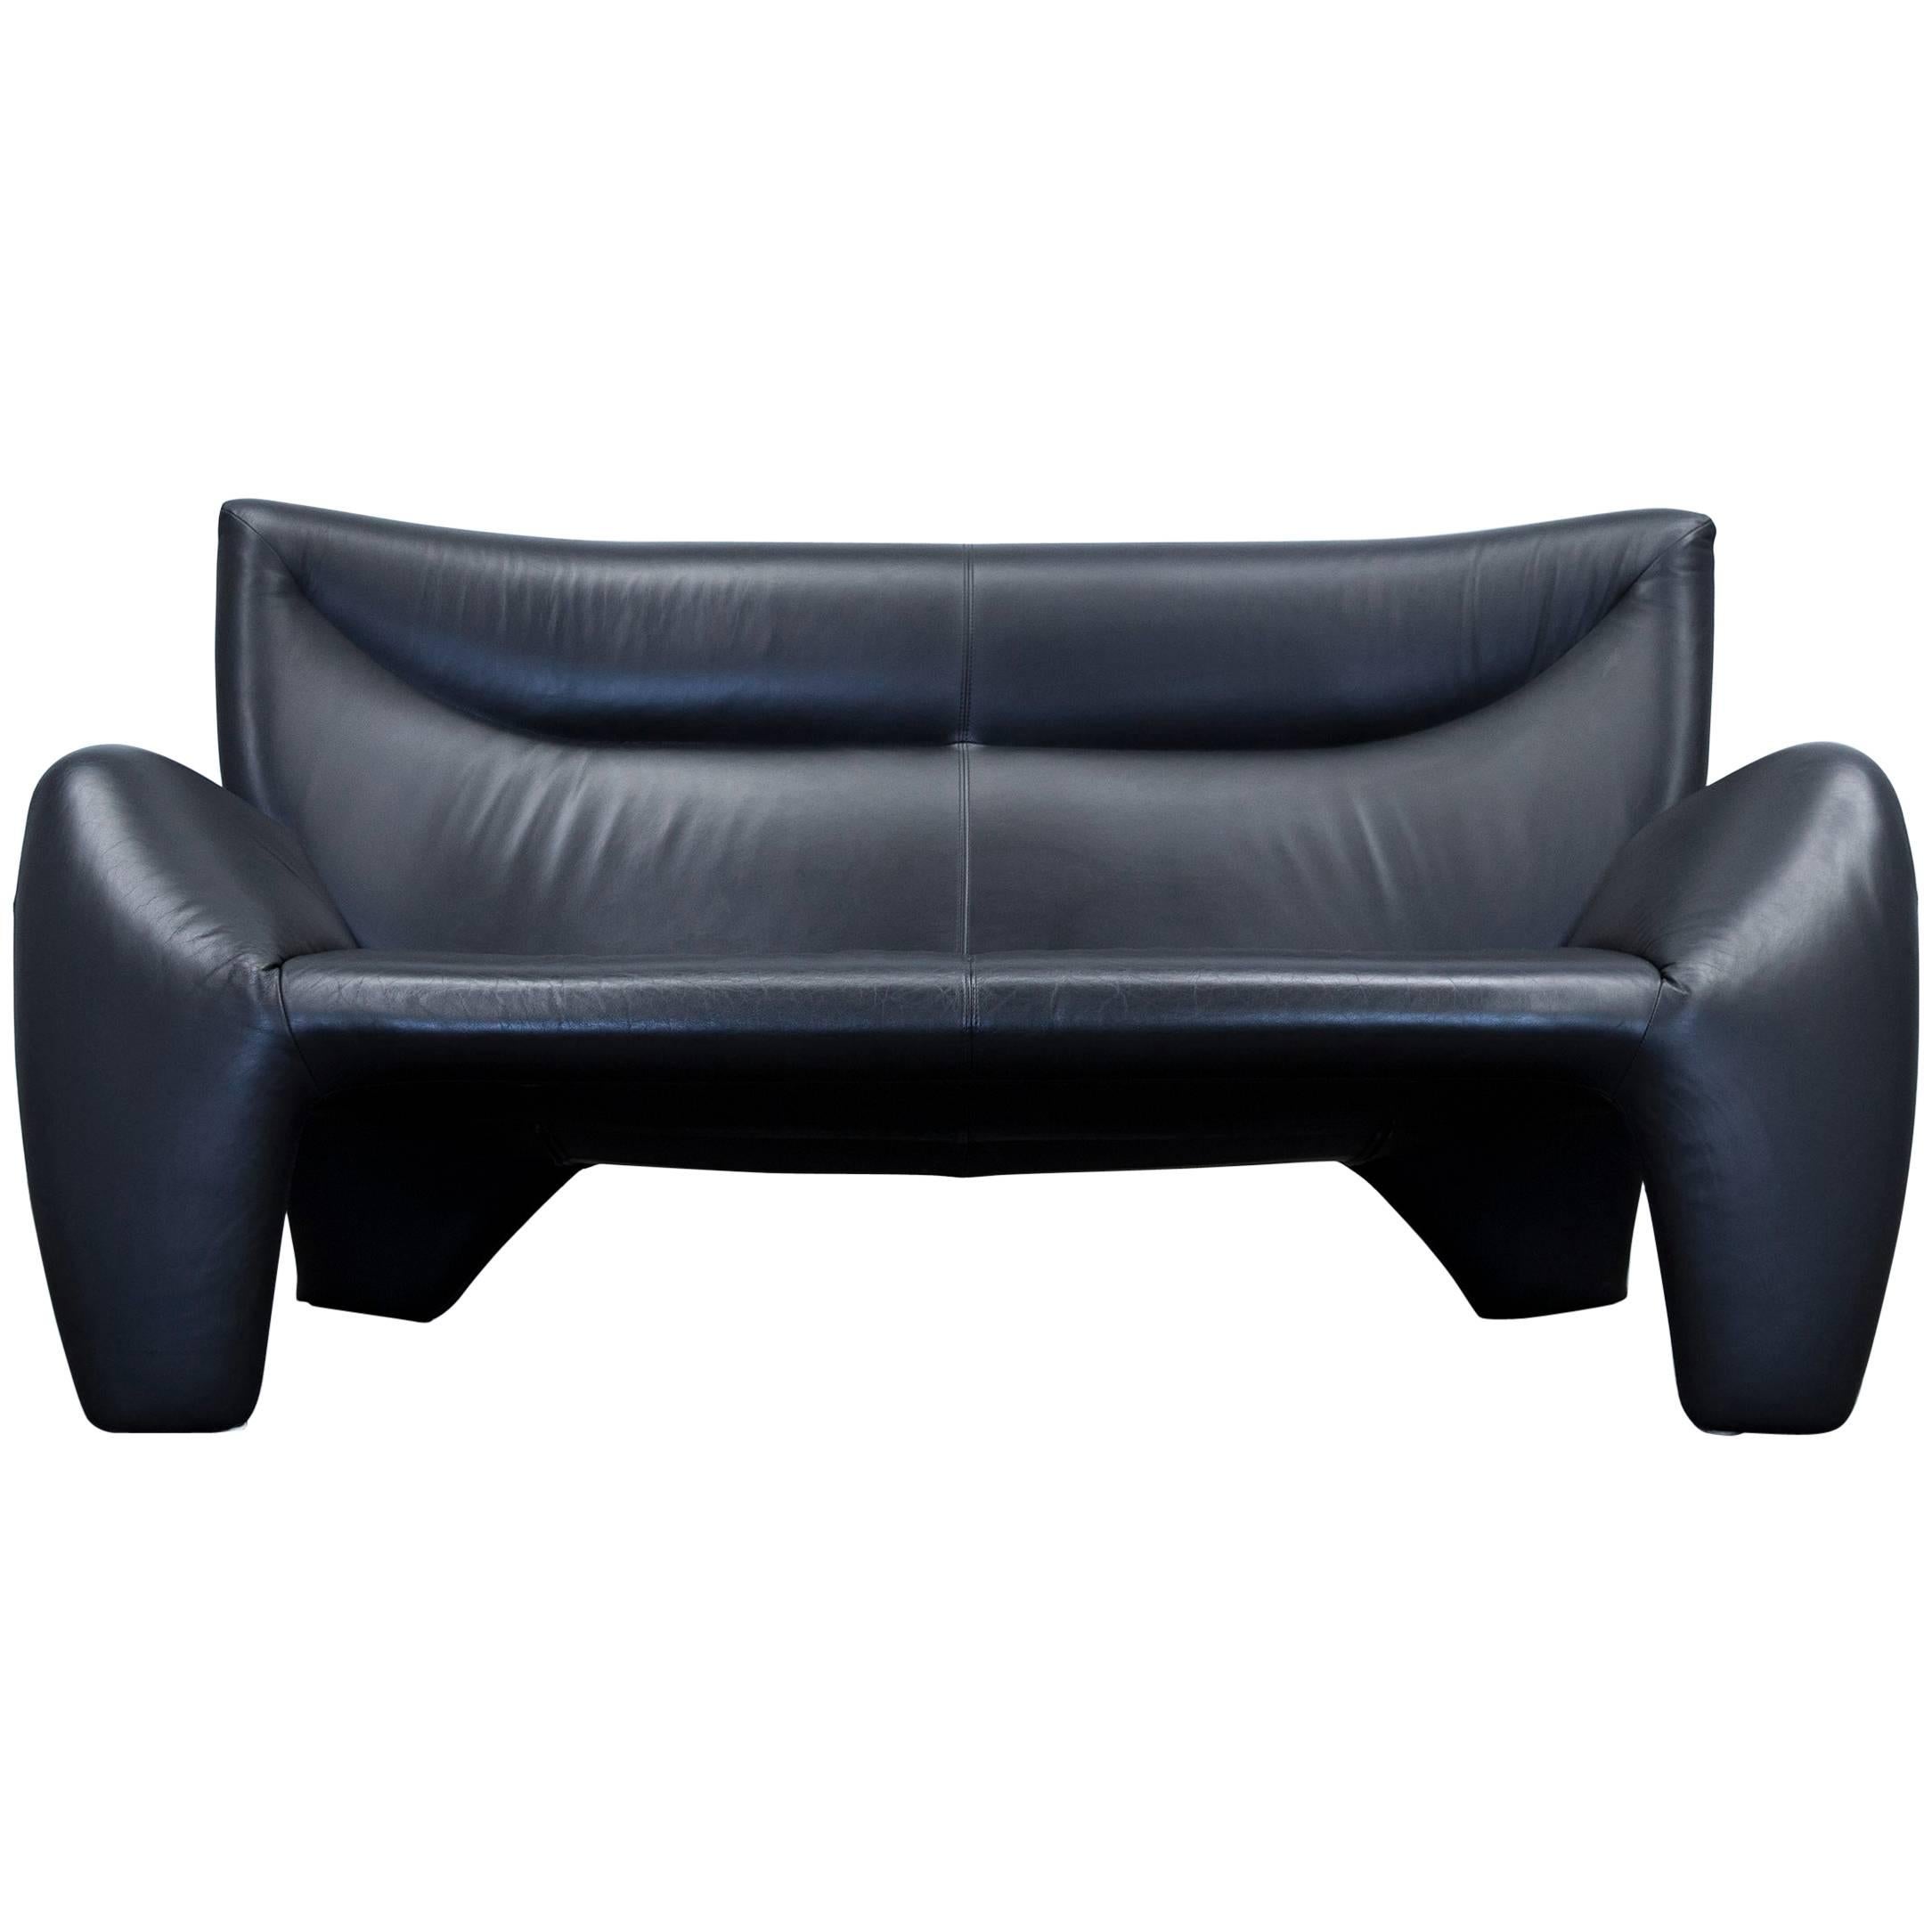 Leolux Echnaton Designer Sofa Leather Black Two-Seat Couch Modern